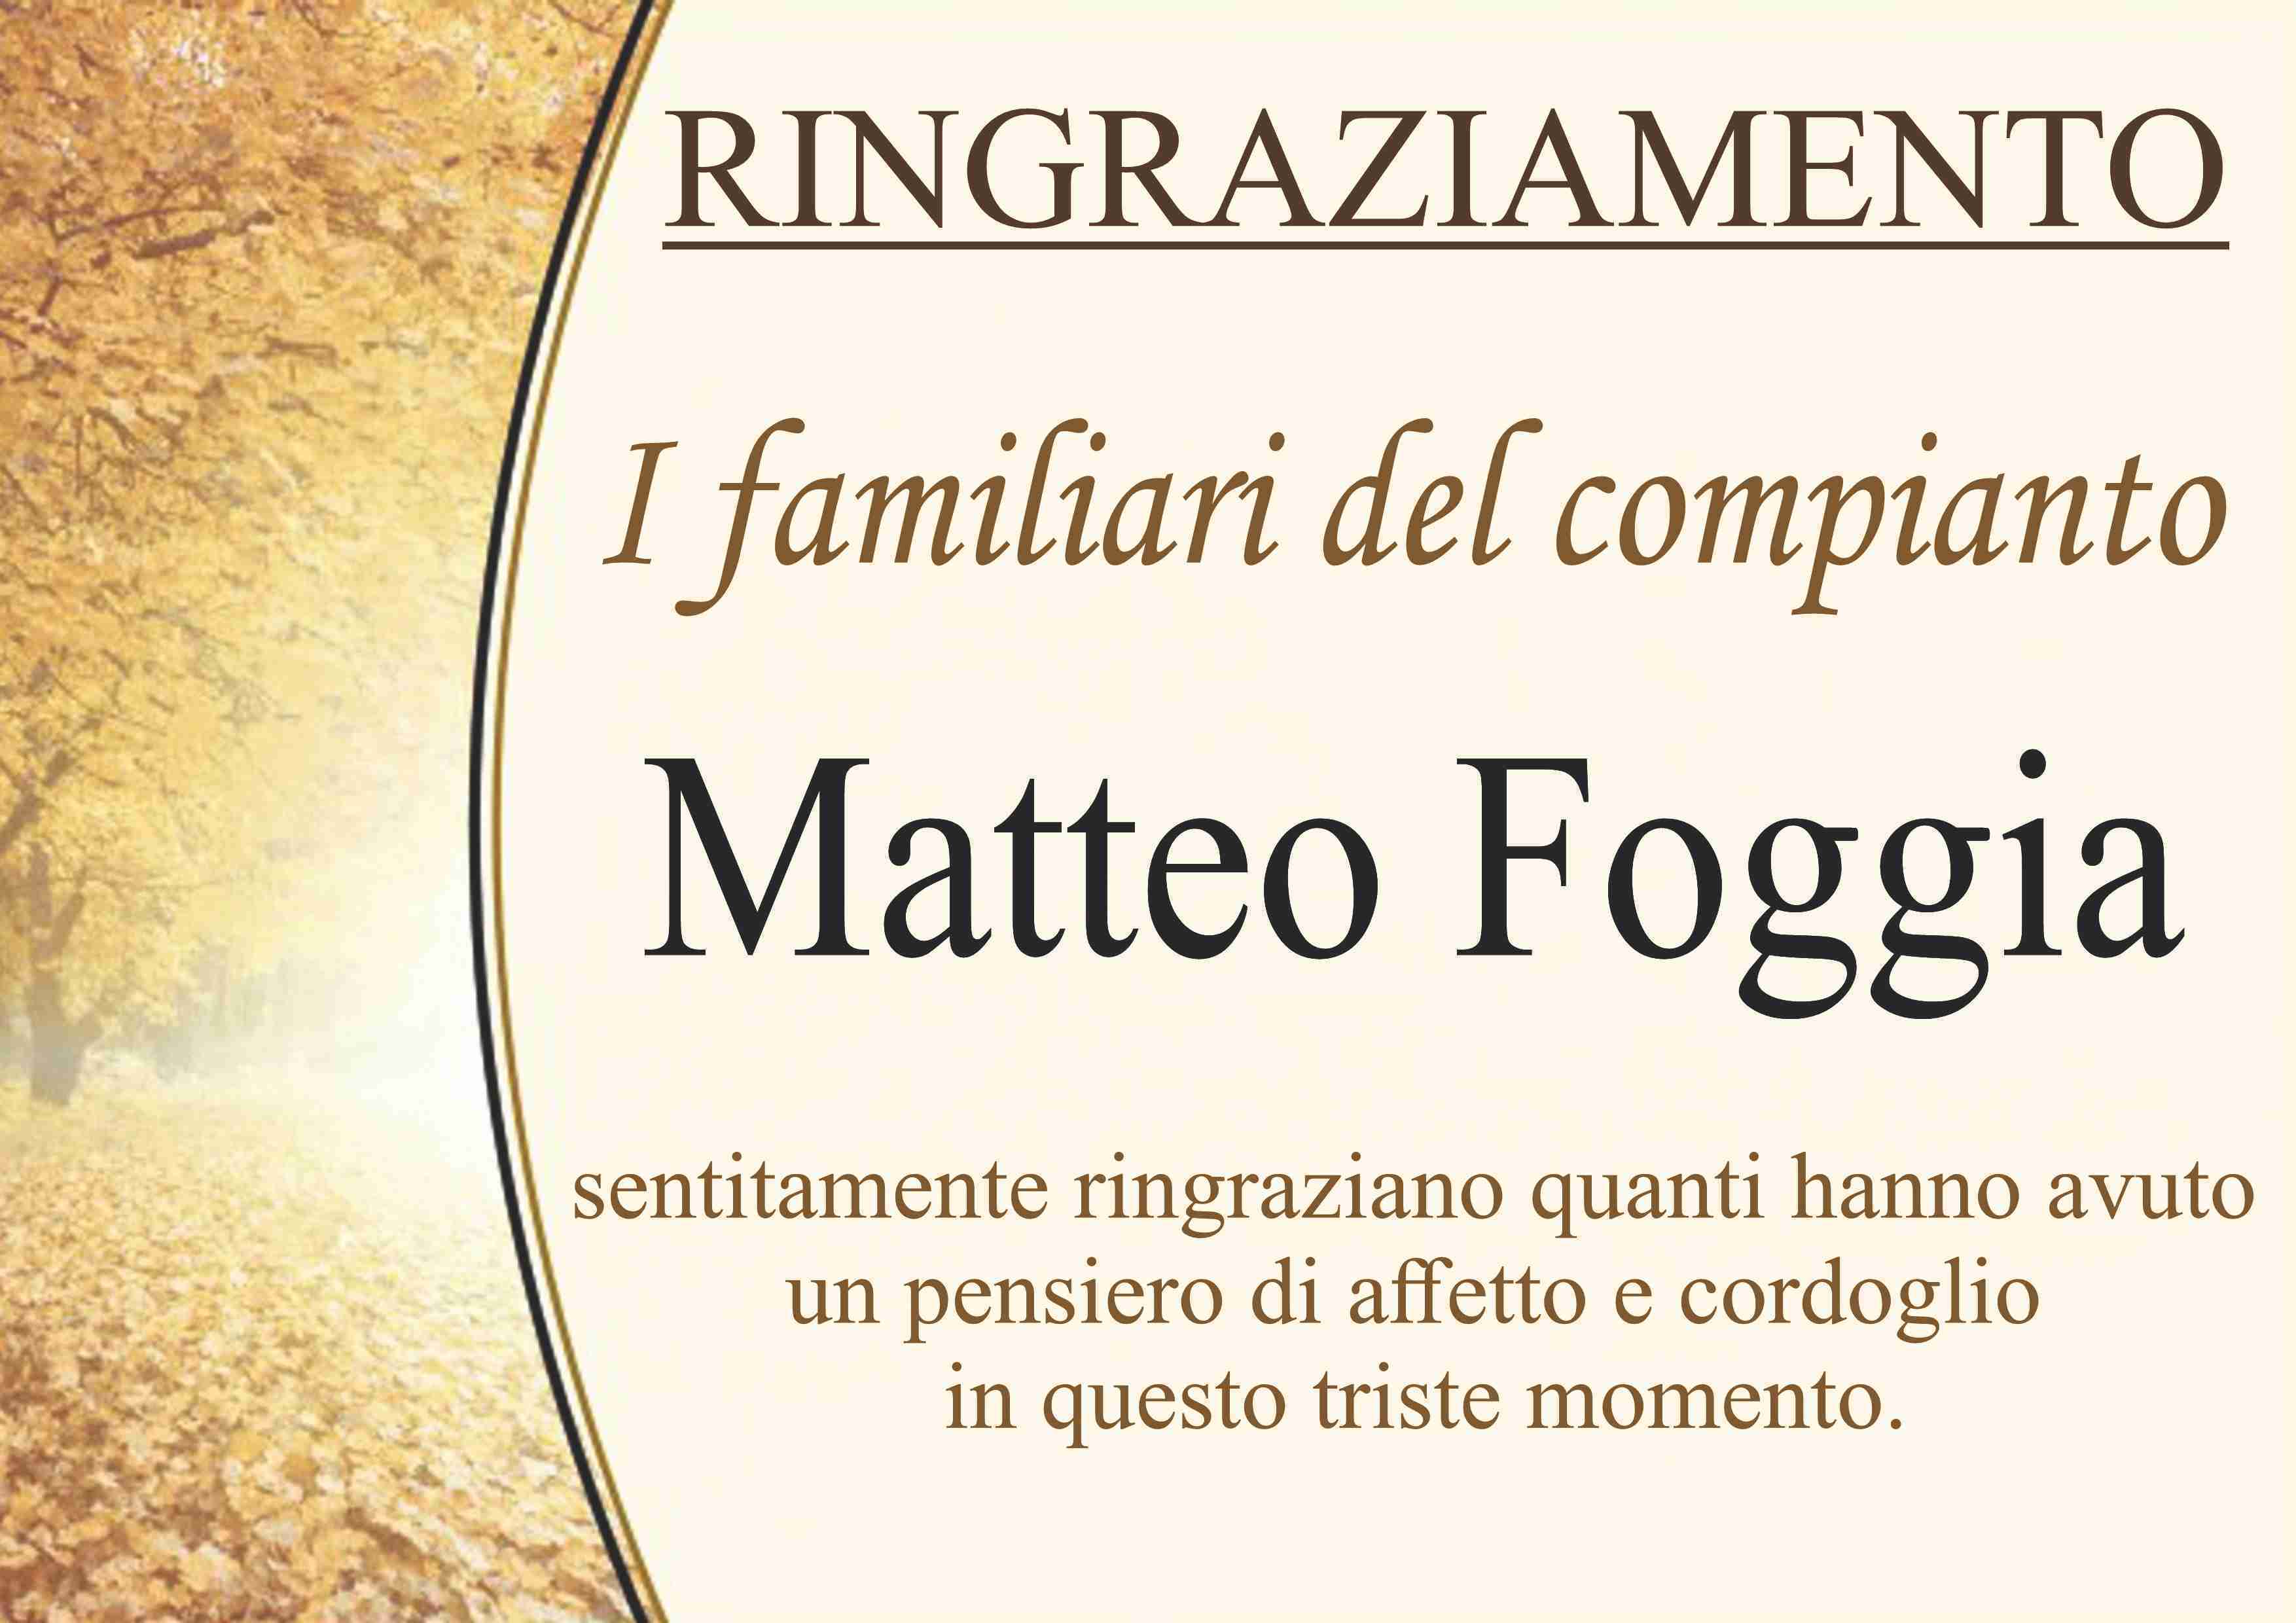 Matteo Foggia